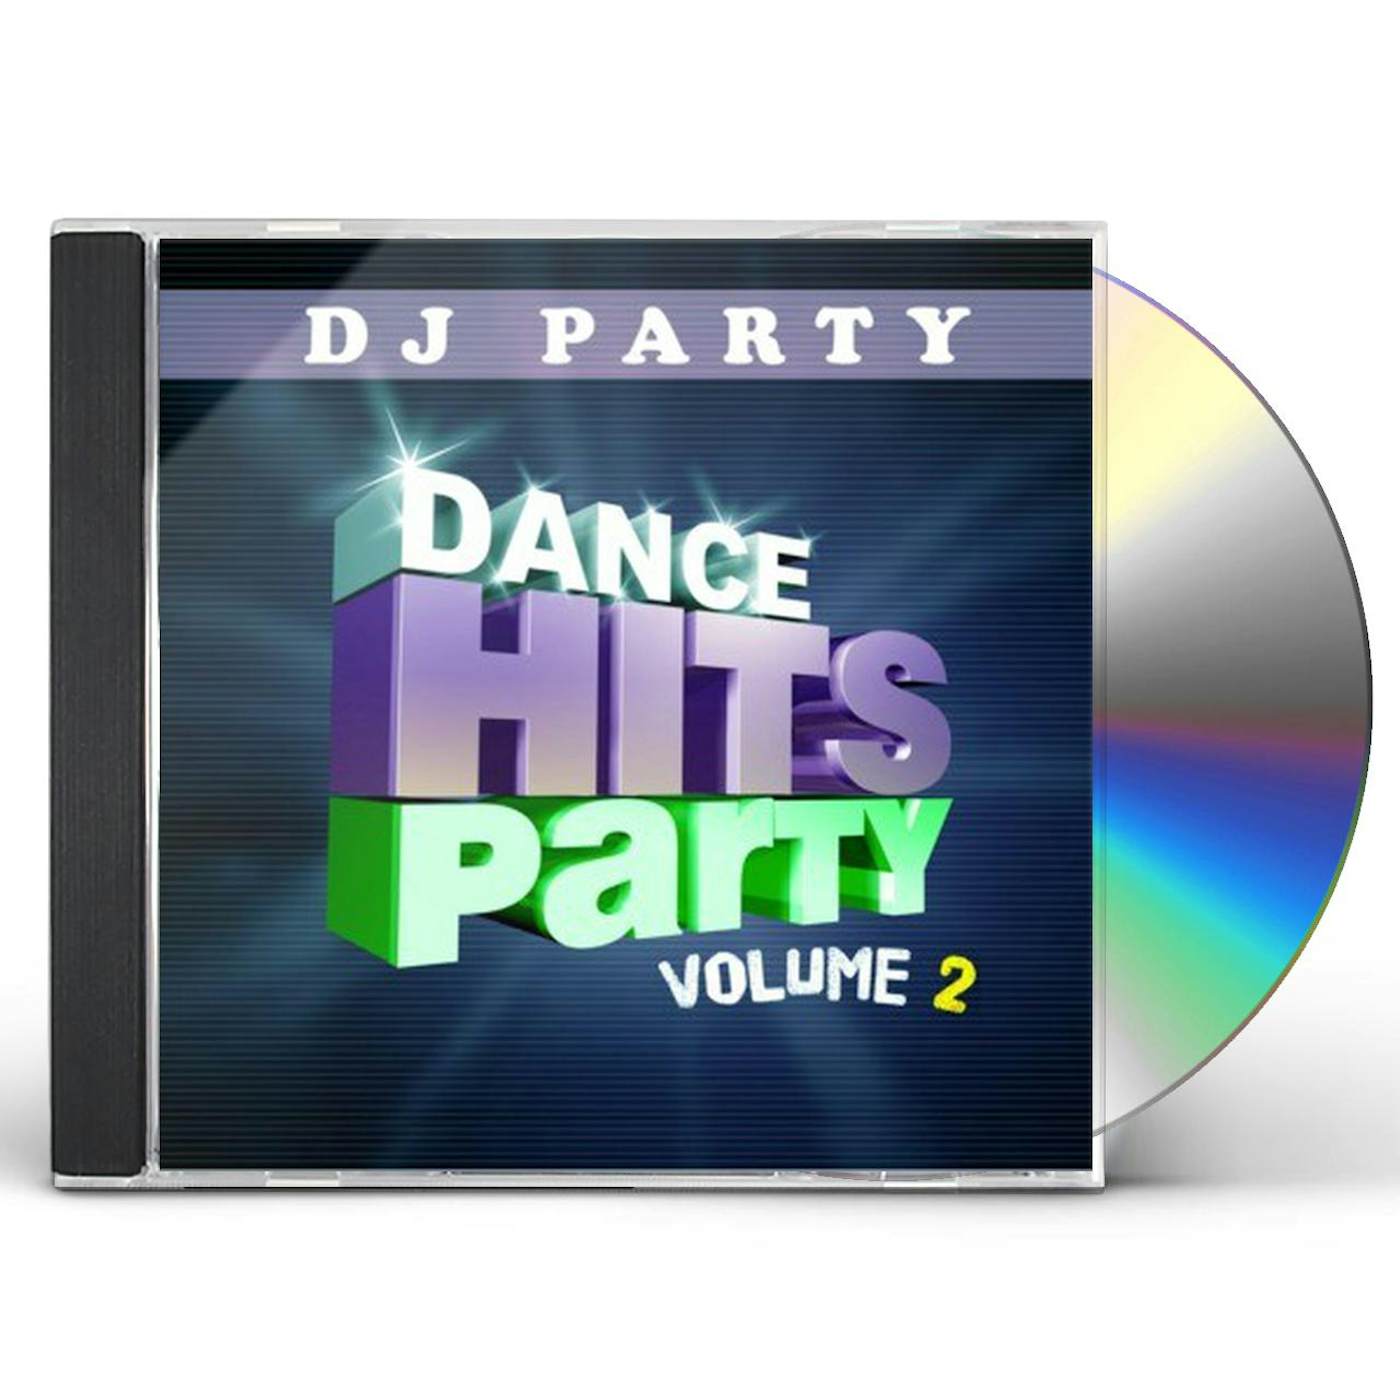 DJ Party DANCE HITS PARTY VOL. 2 CD